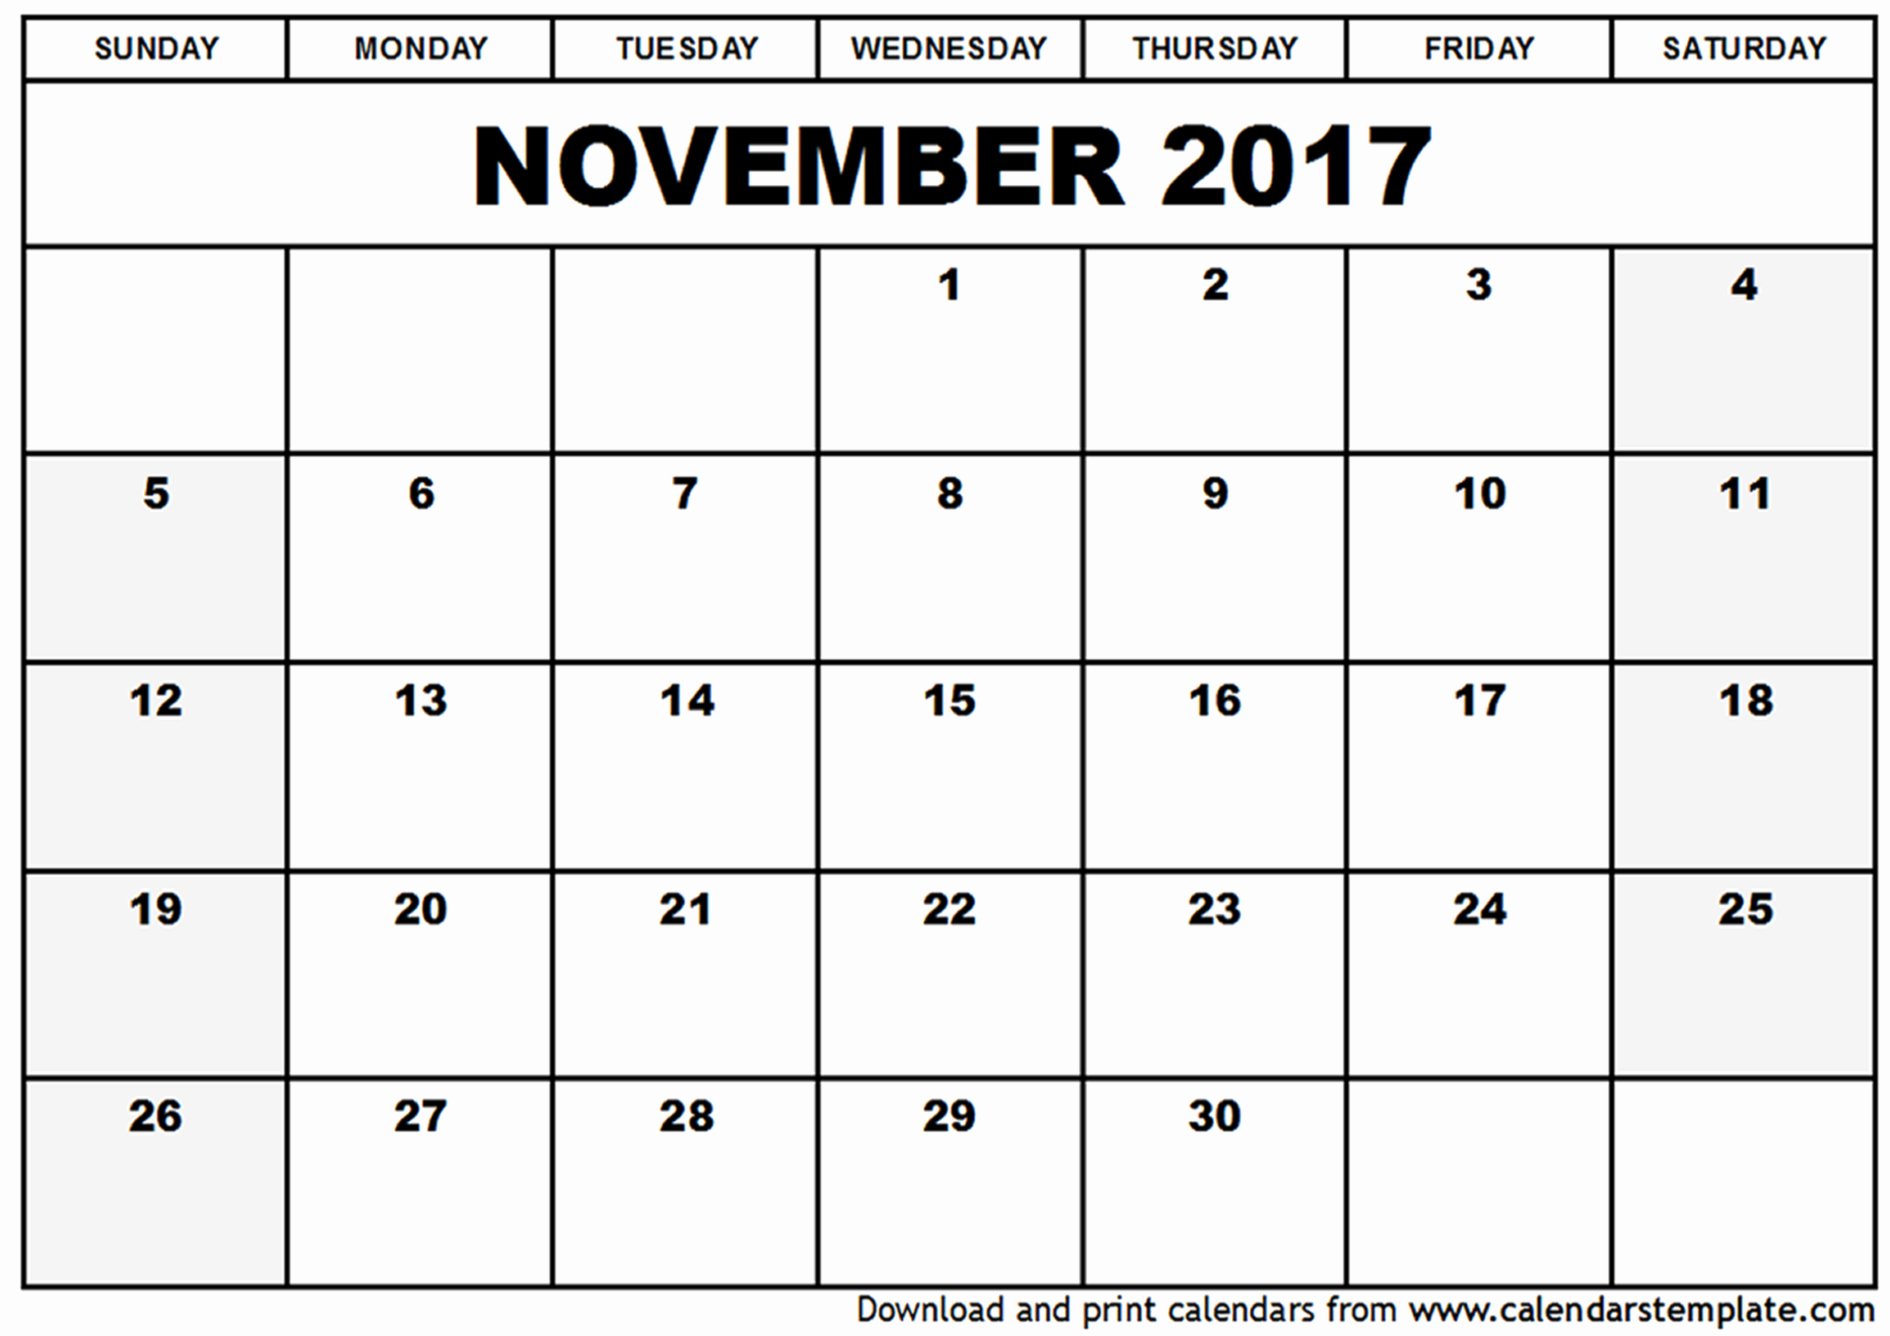 November 2017 Calendar Excel